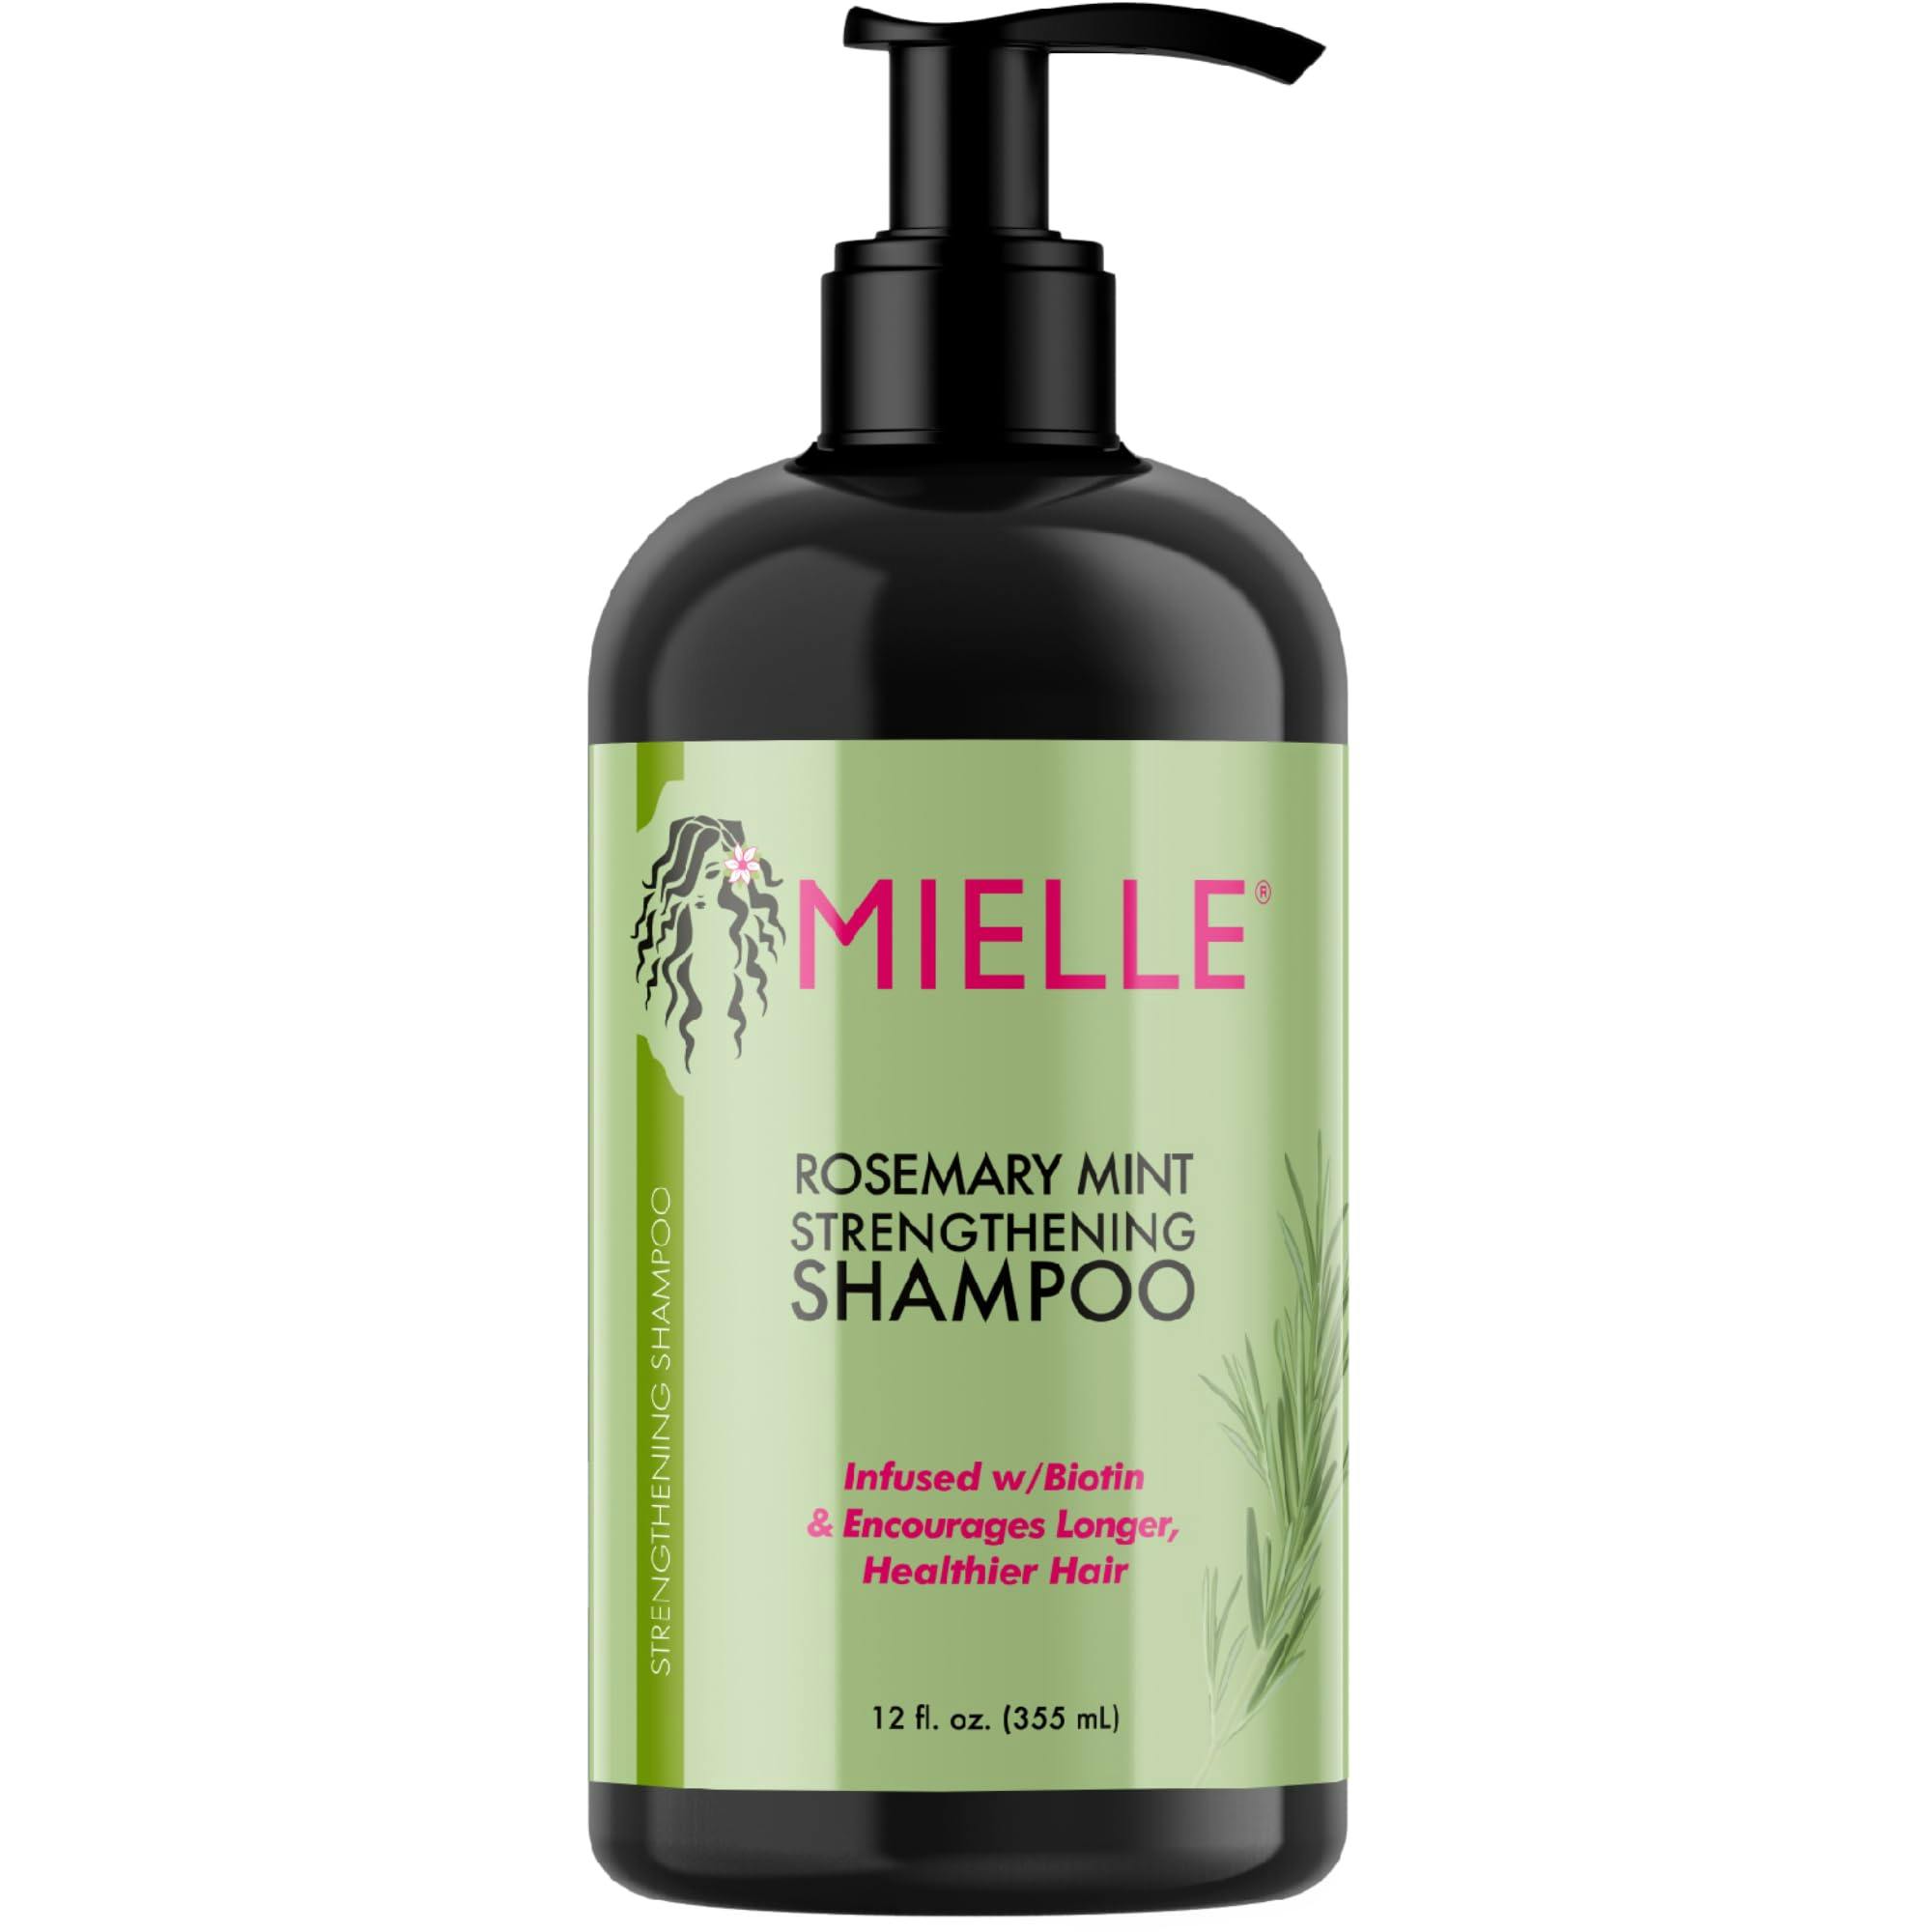 Mielle rosemary mint strengthening shampoo Зміцнюючий шампунь, м'ята з розмарином